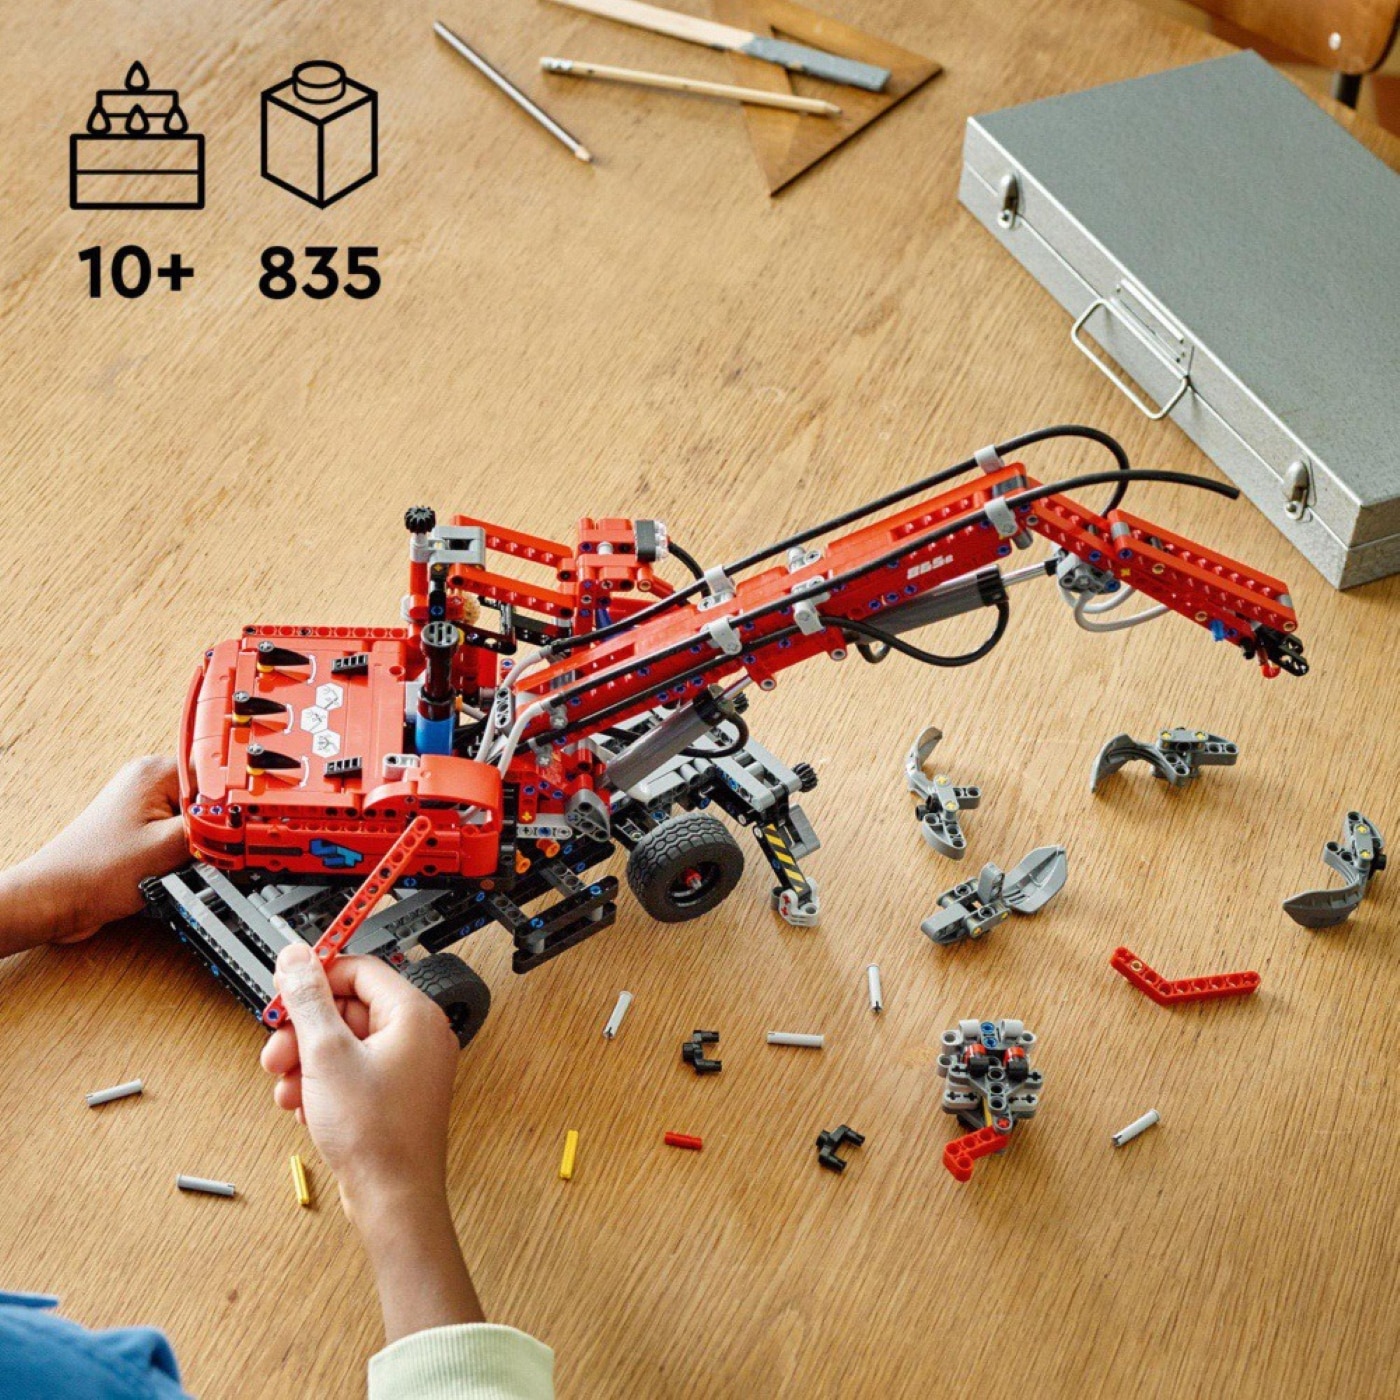 LEGO 科技系列 物料搬運機，在玩家們拼砌過程中，可幫助他們增進操作能力、培養自信，可結合其他正版樂高盒組享受更多樂趣。